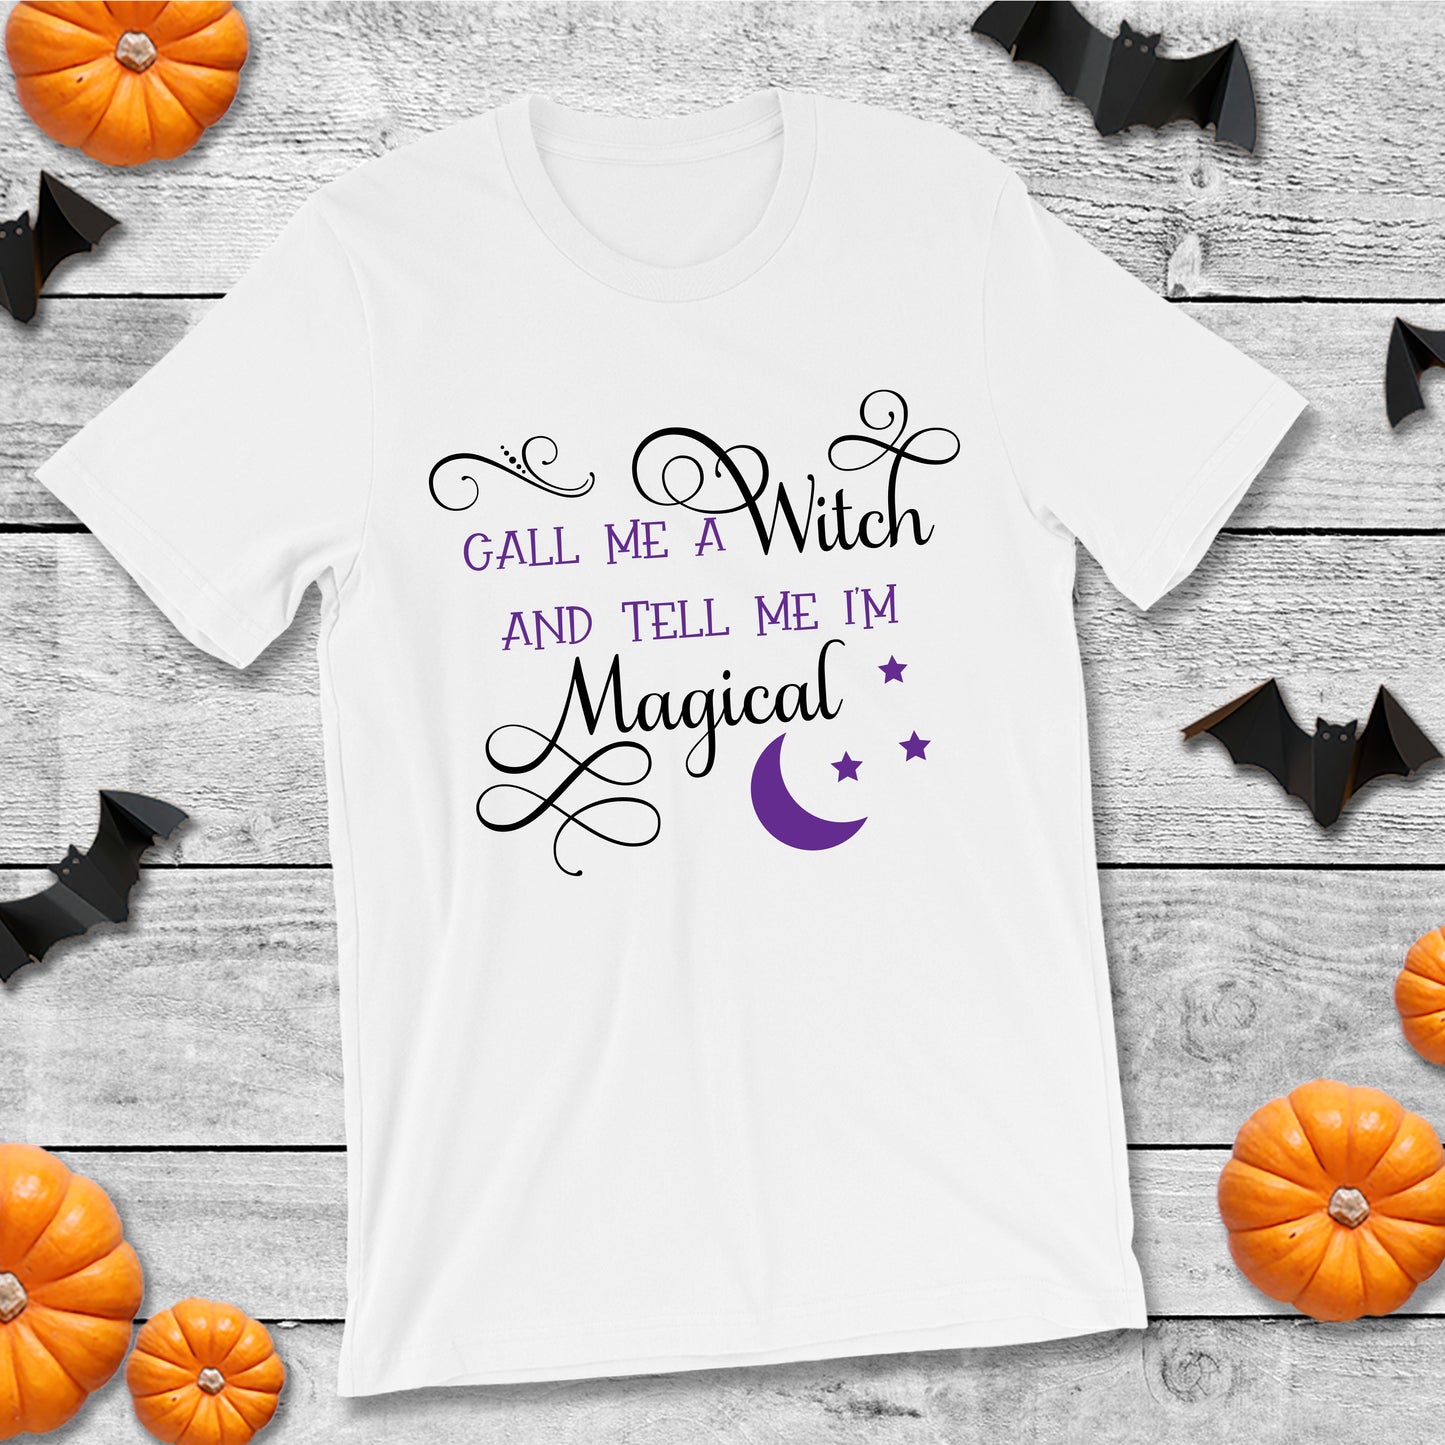 Fun, custom "Call me a Witch" T-shirt